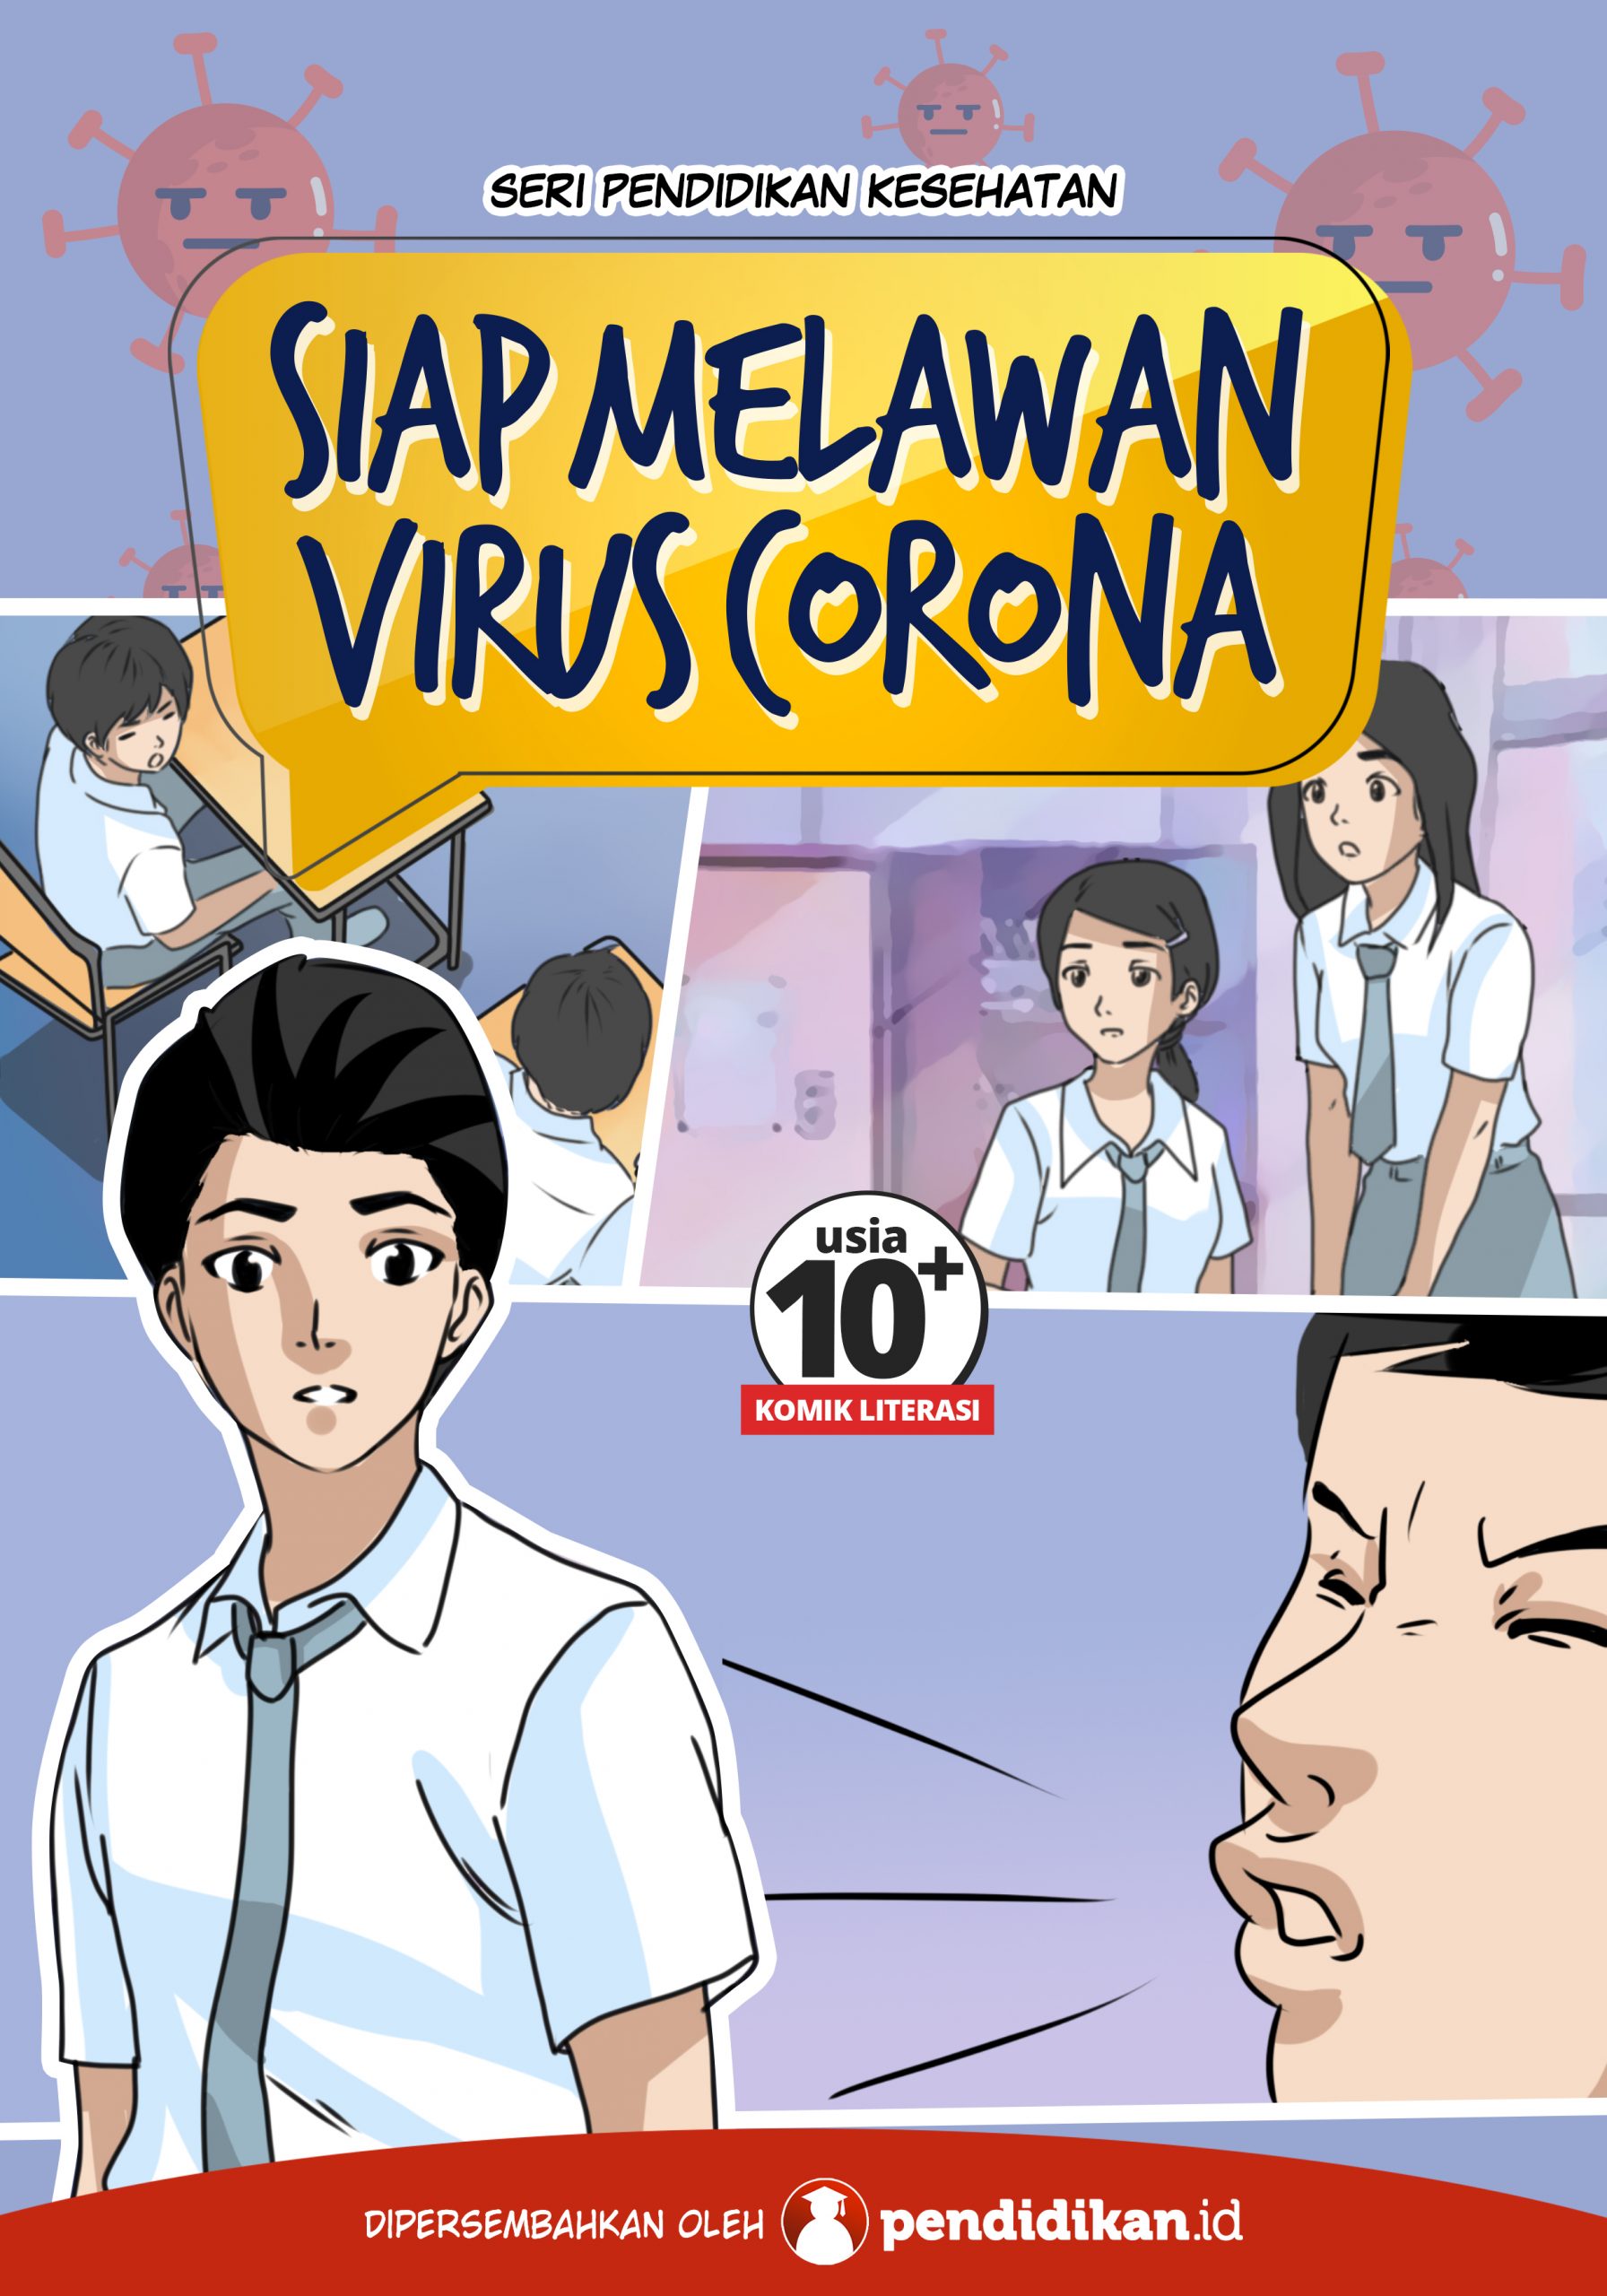 komik kesehatan menghadapi virus corona covid-19